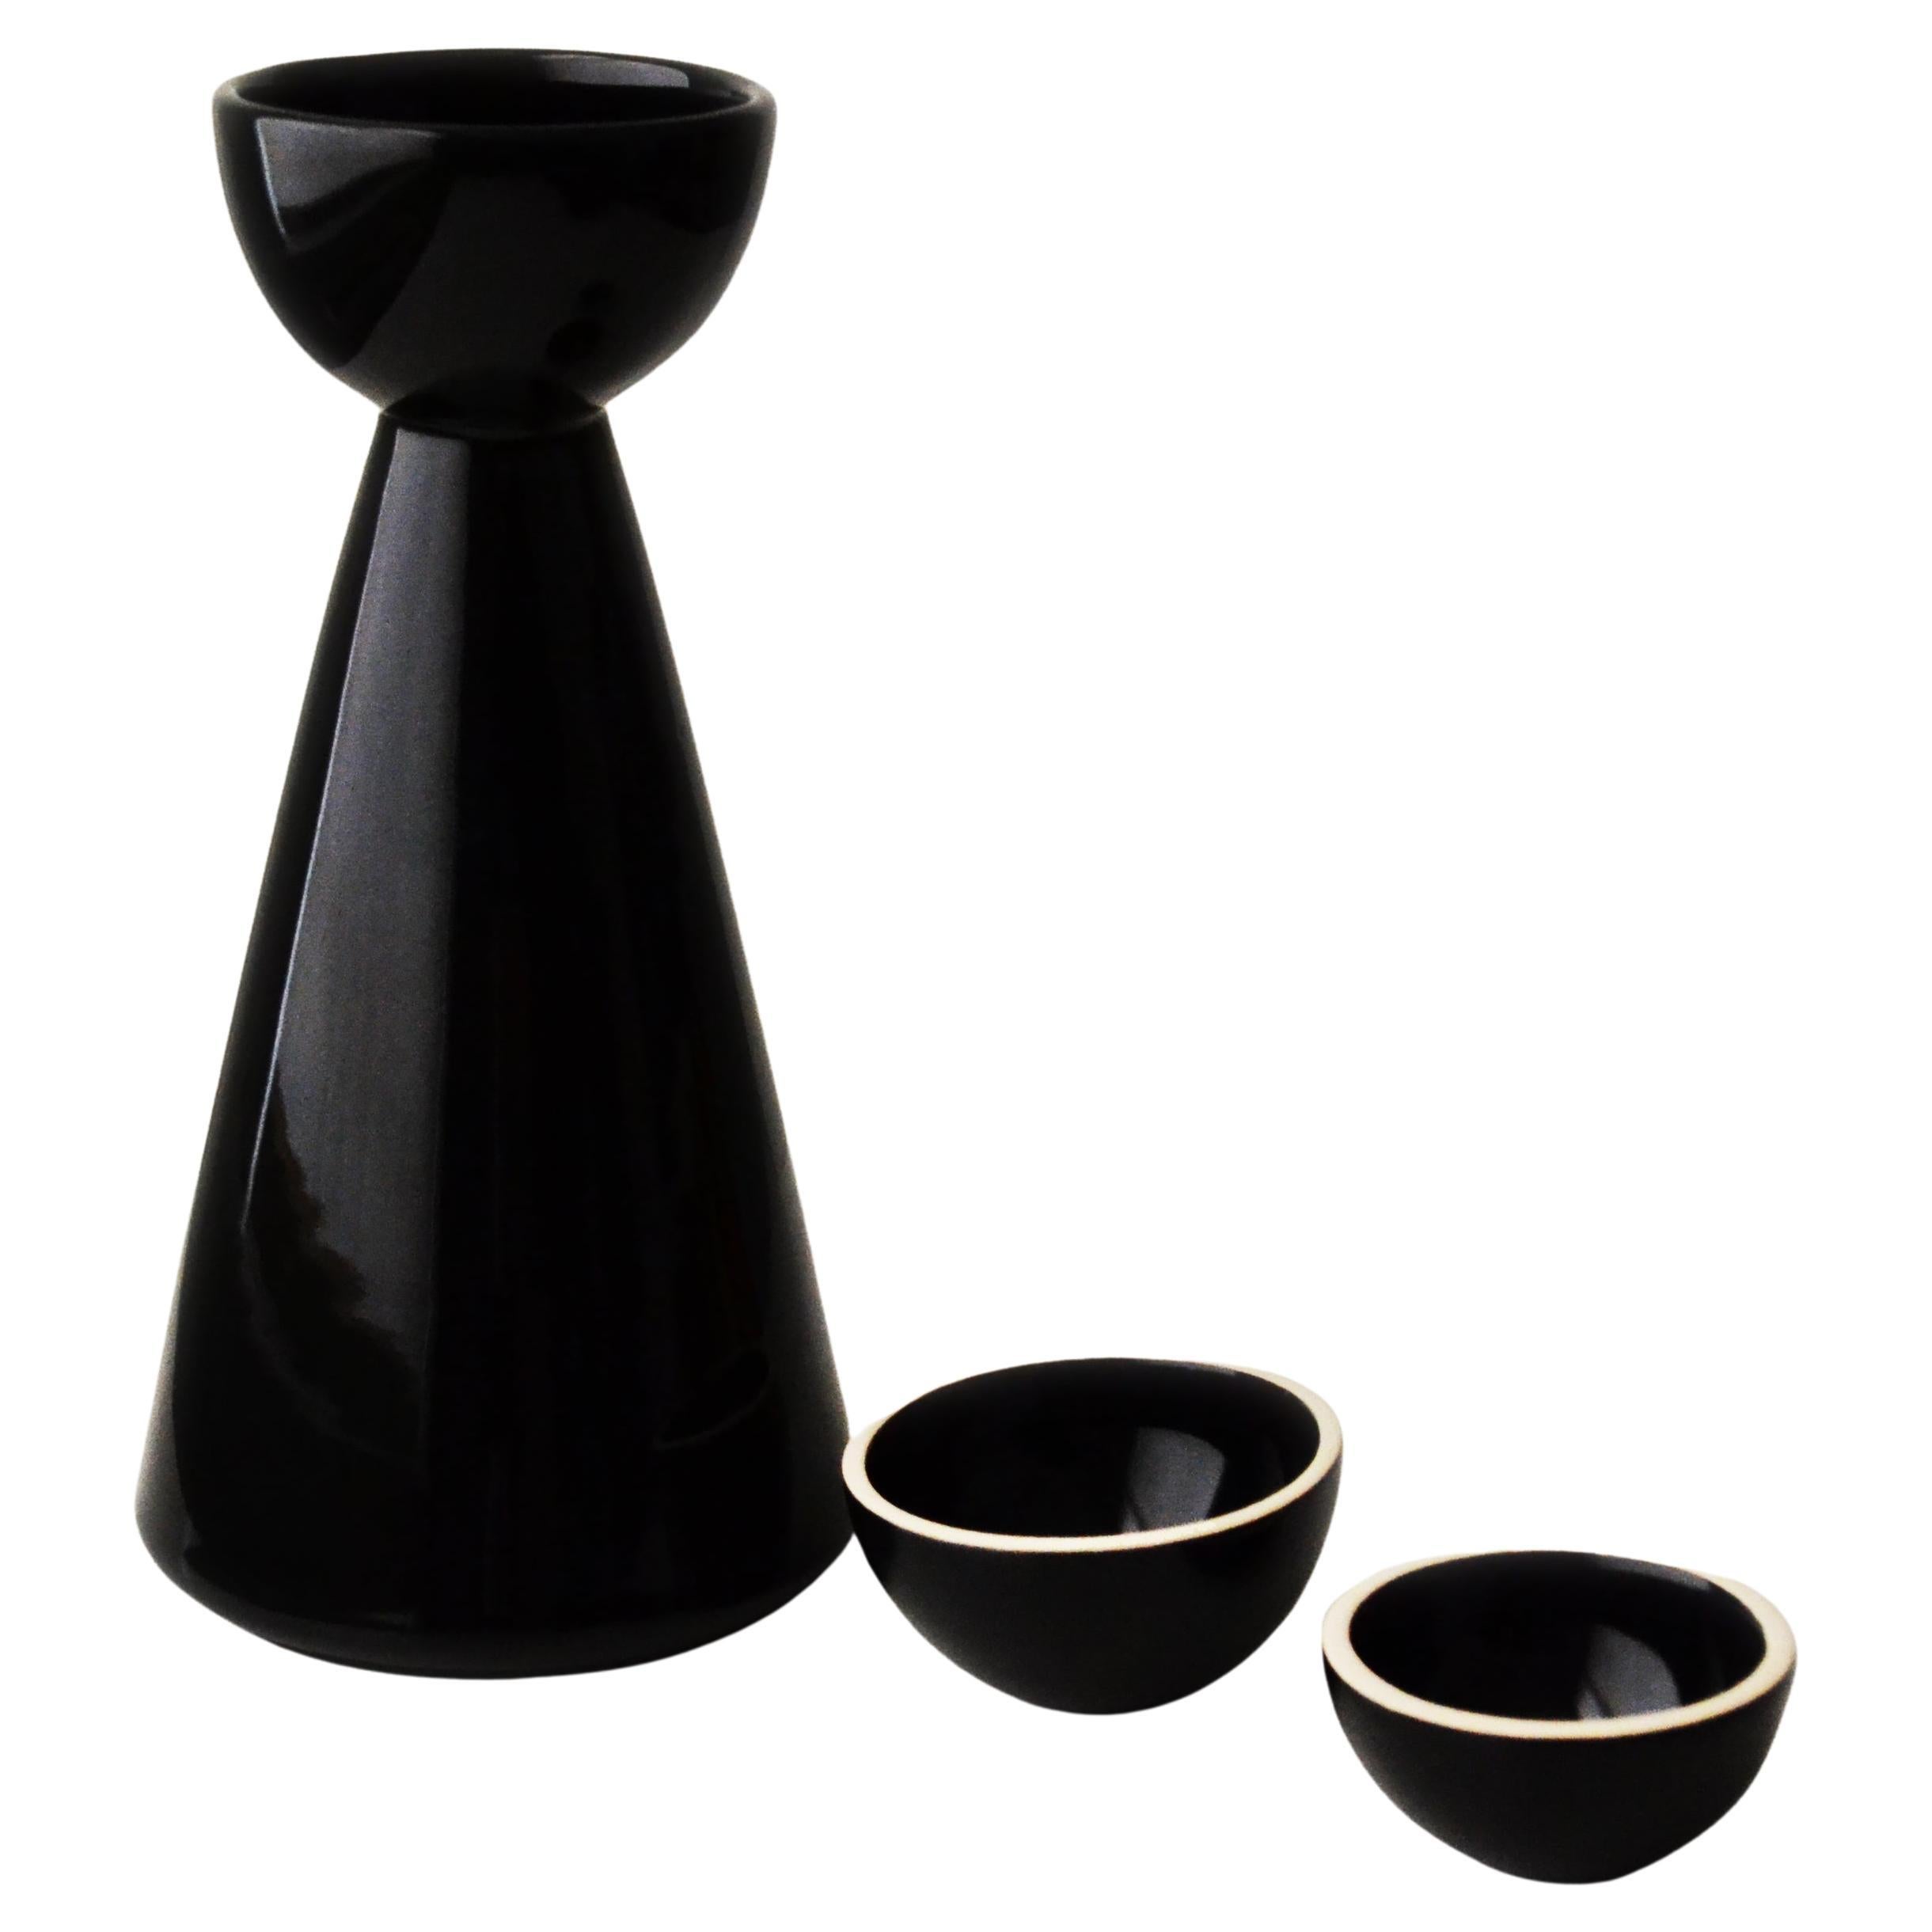 Special Edition Ceramic Carafe and Cups Shine Black Mezcal bottle Halfmoon